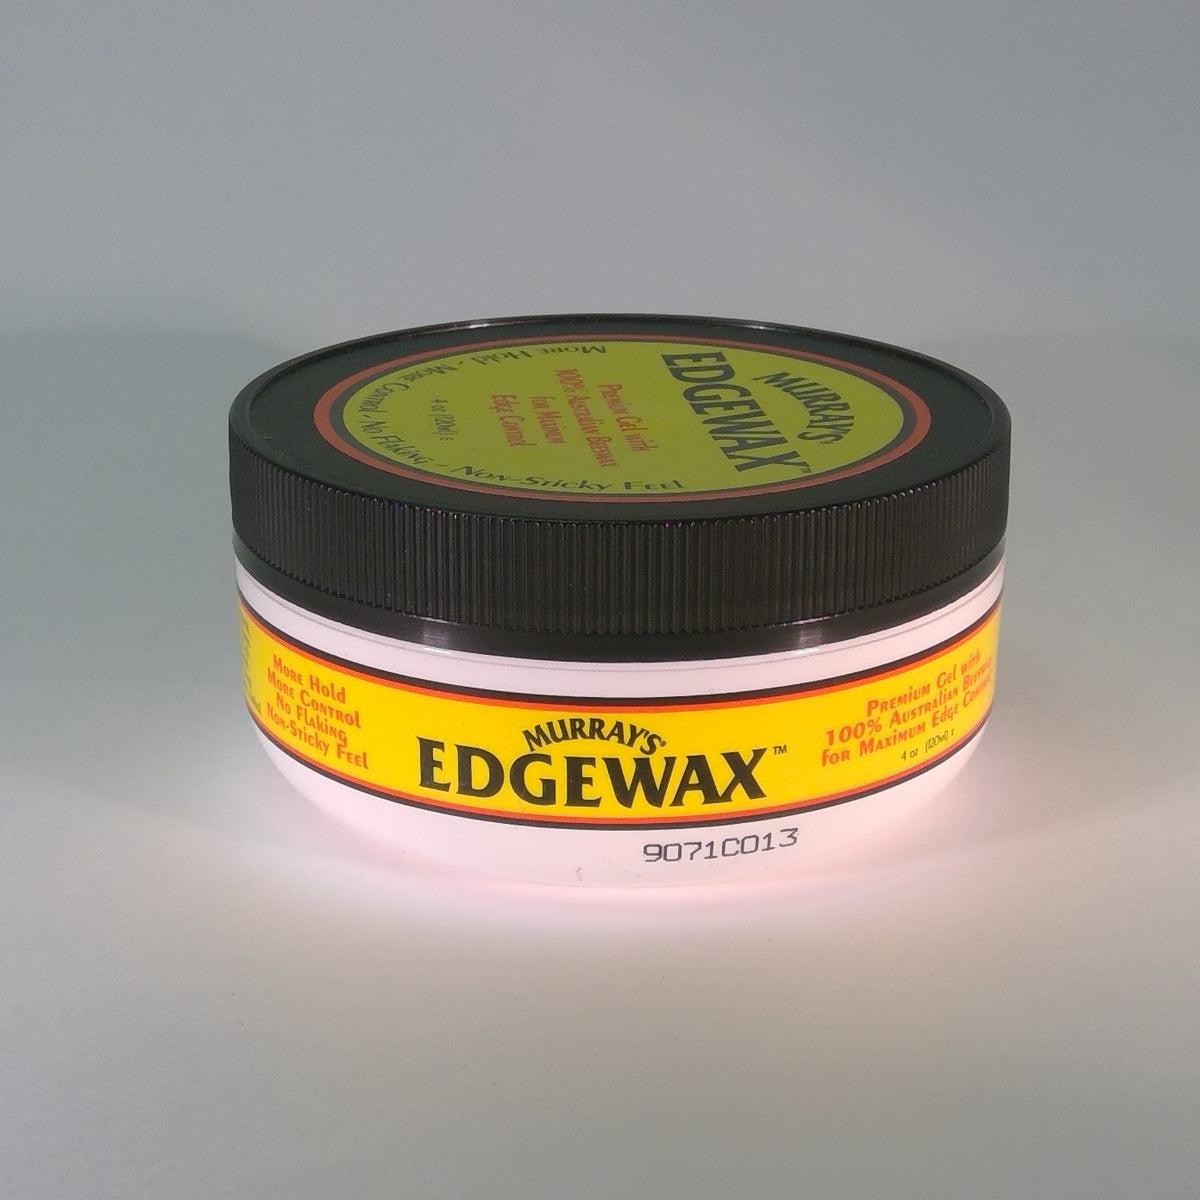 Murrays Edgewax Extreme Hold Gel with 100% Australian Beeswax